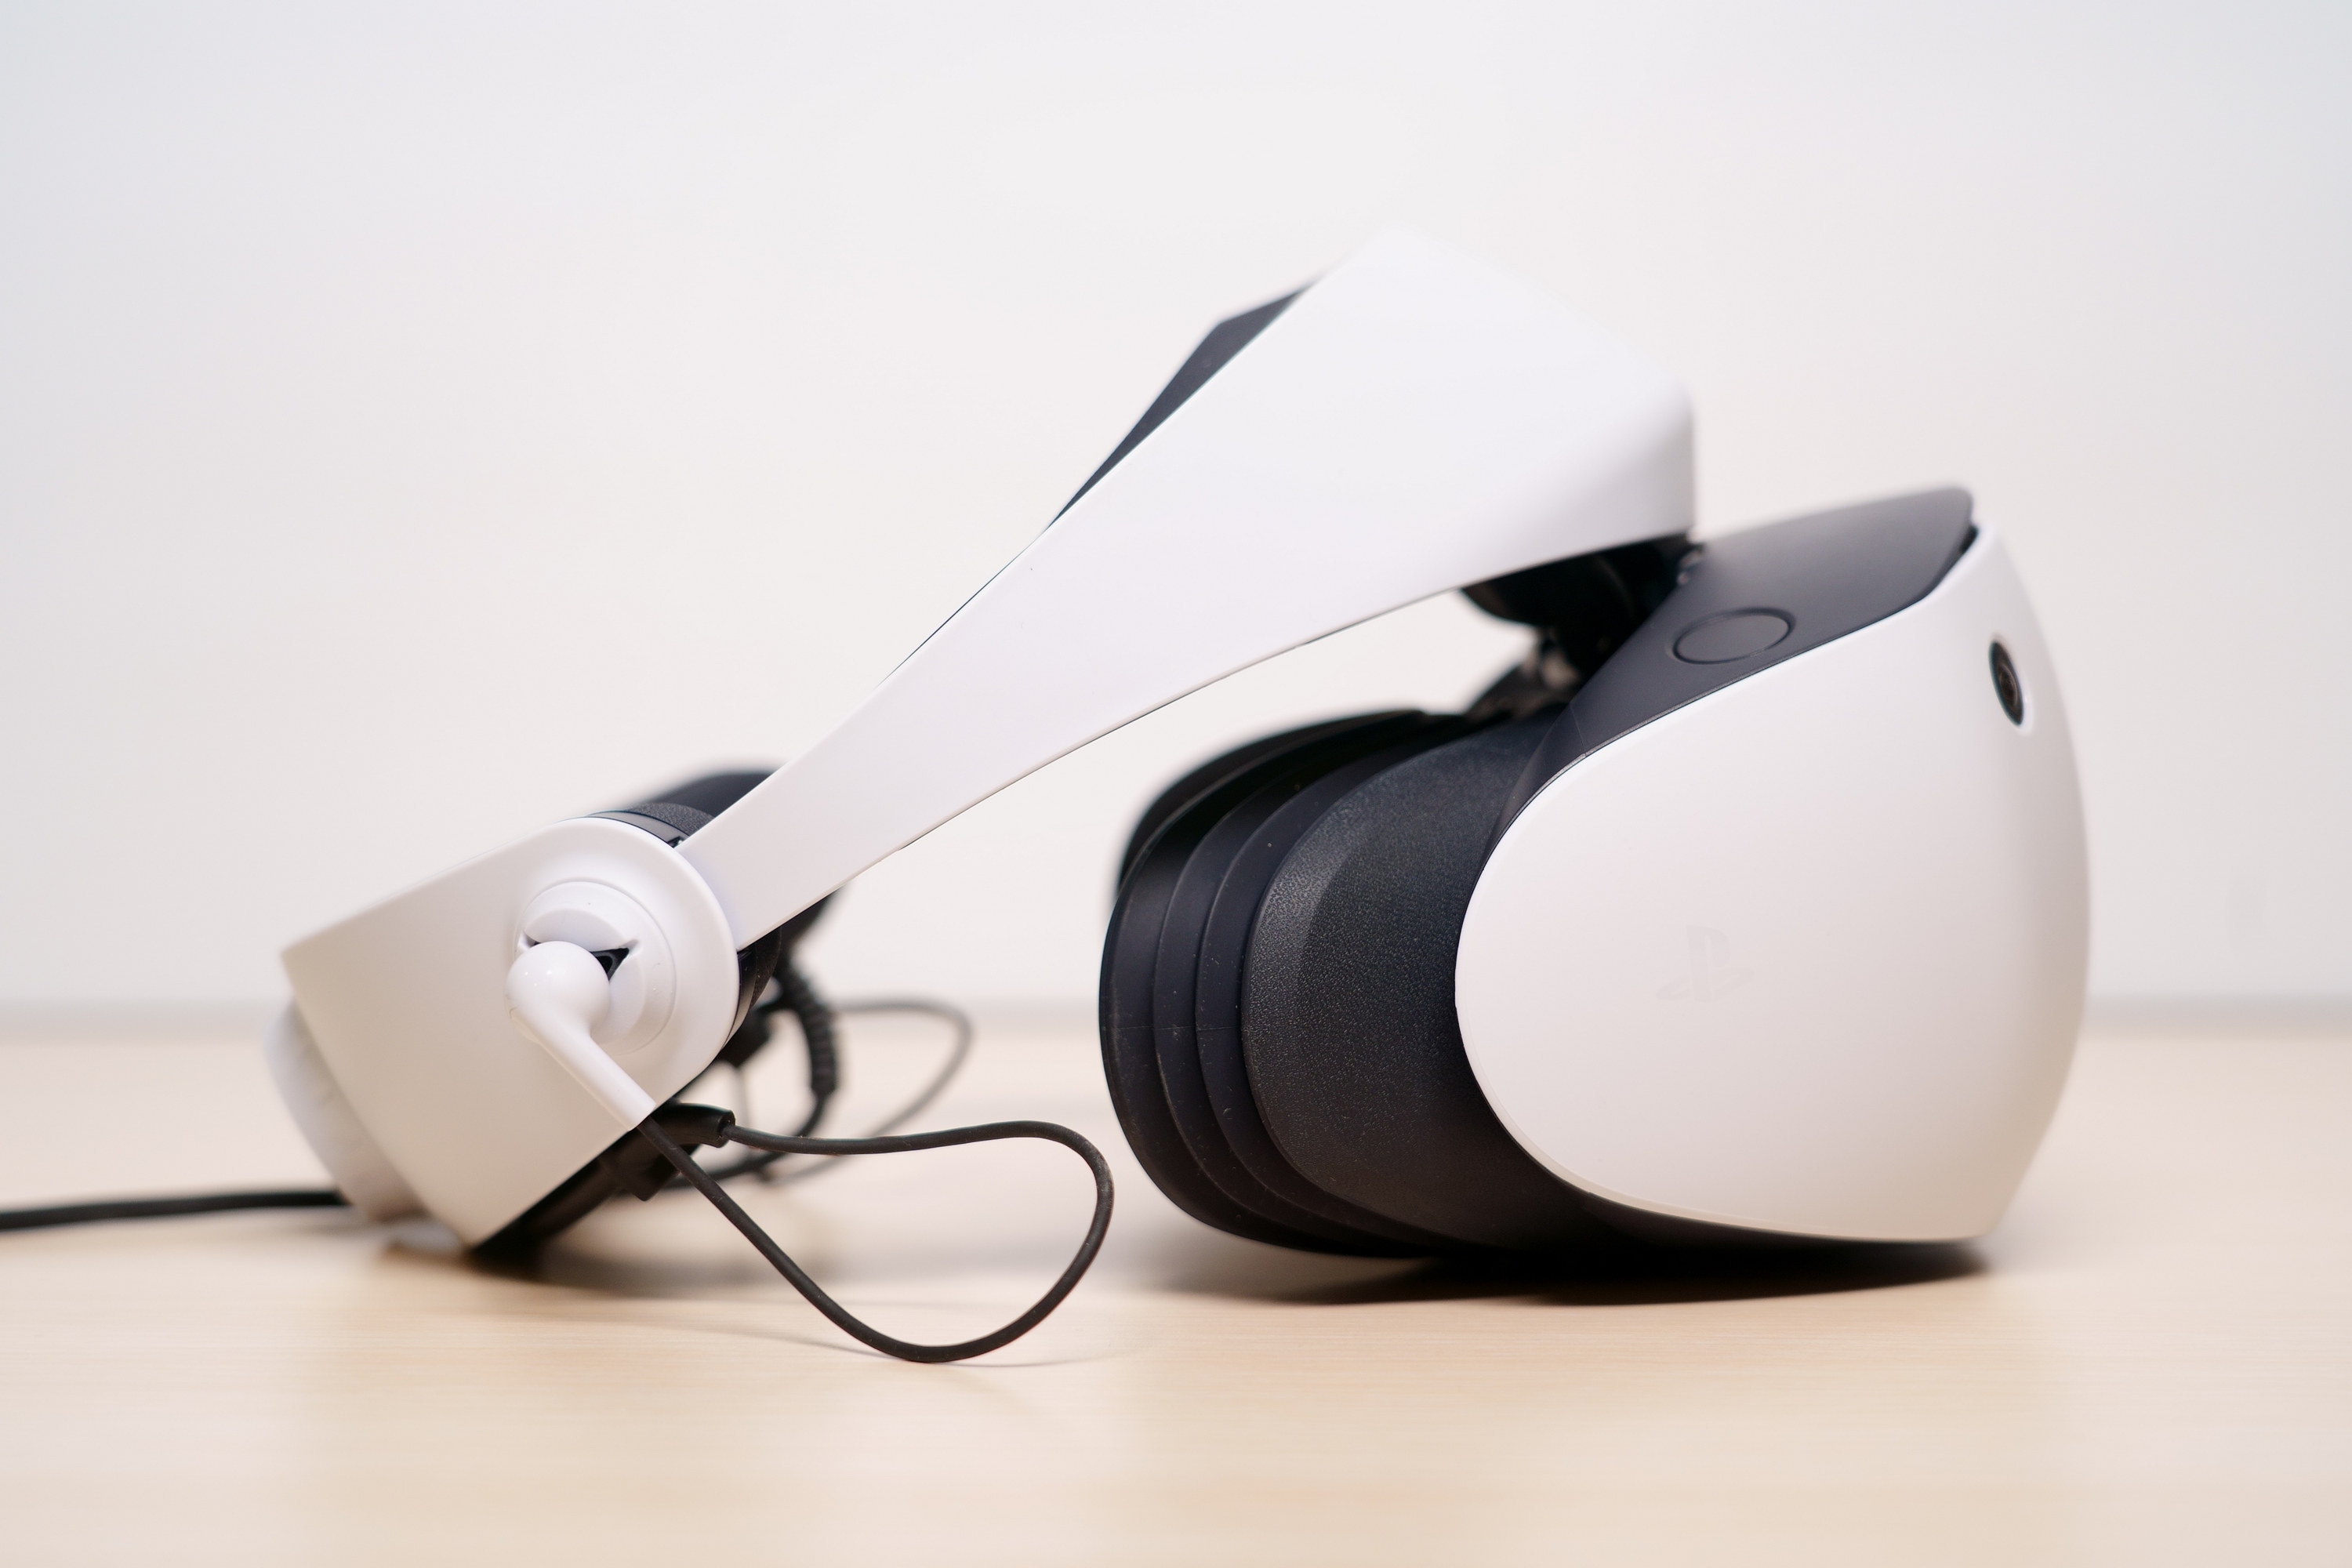 PS5 新一代虚拟实境装置 PlayStation VR2 体验报导 融合创新功能与正统进化的完成品插图